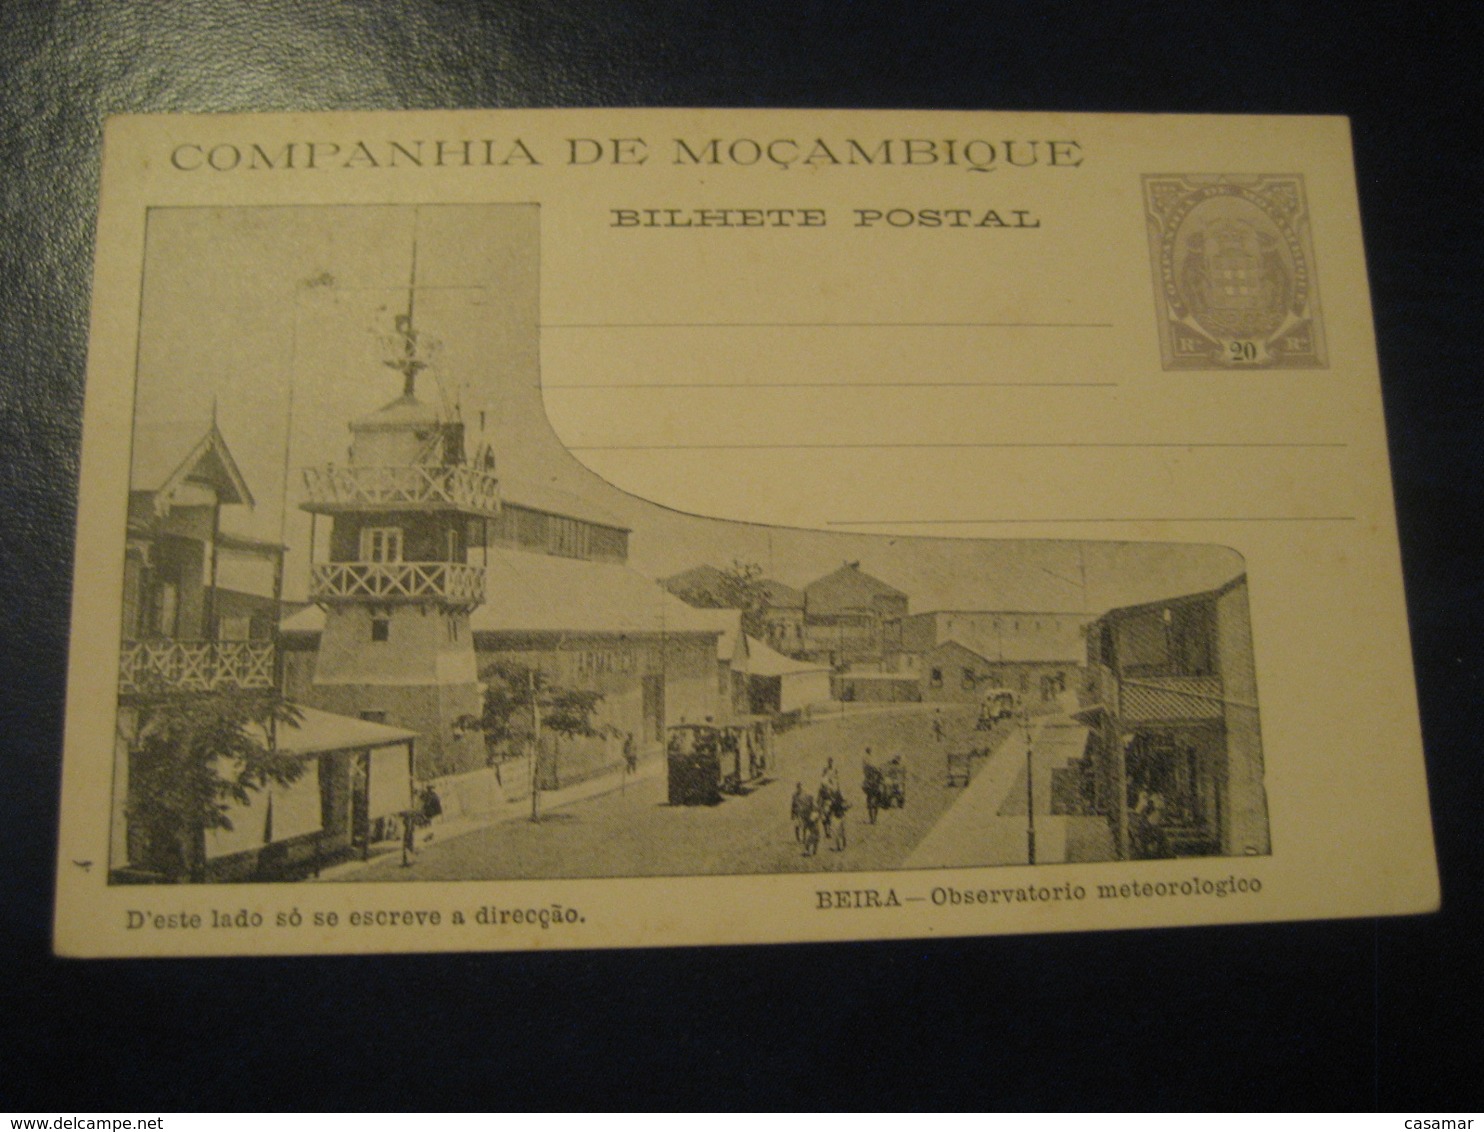 20 Reis Beira Meteorology Observatory Bilhete Postal Companhia De Moçambique MOZAMBIQUE Portugal Colonies Stationery - Mozambique